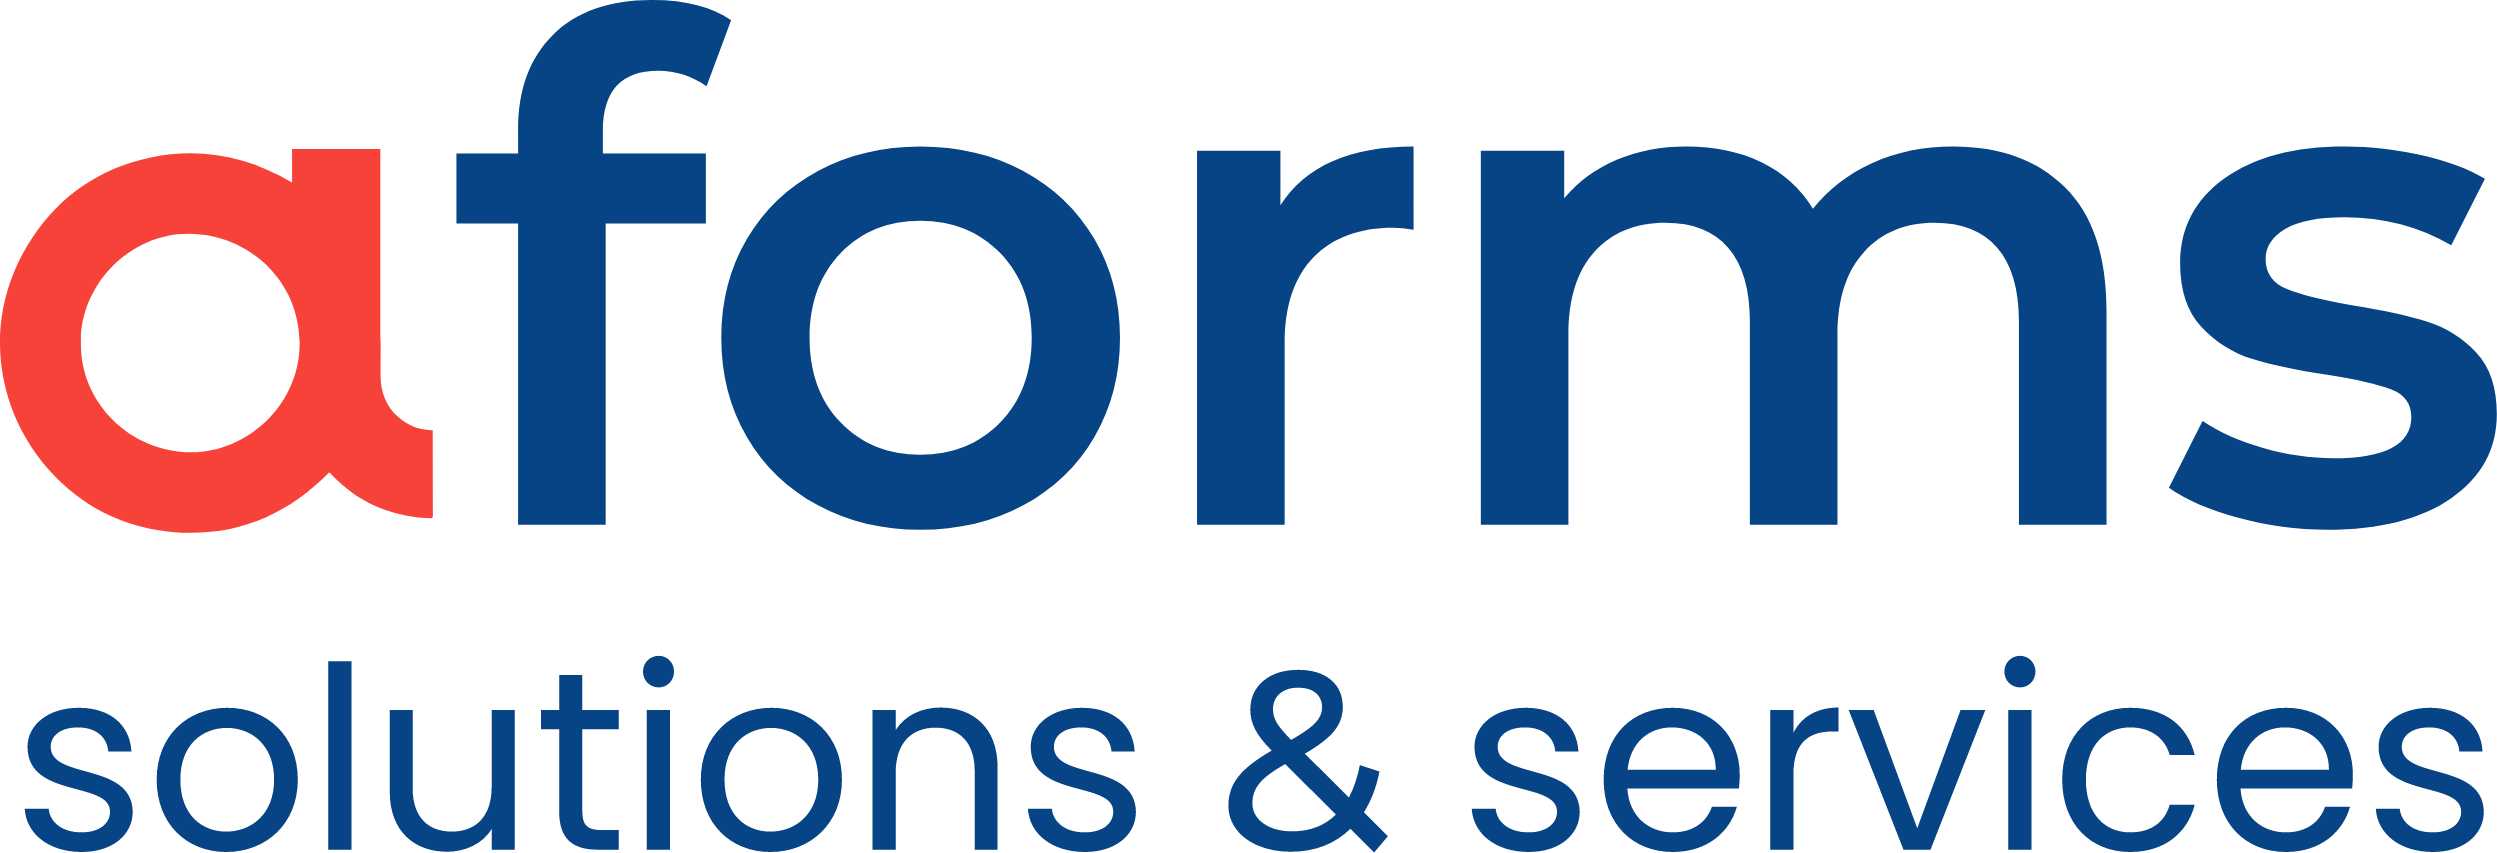 aforms2web Logo